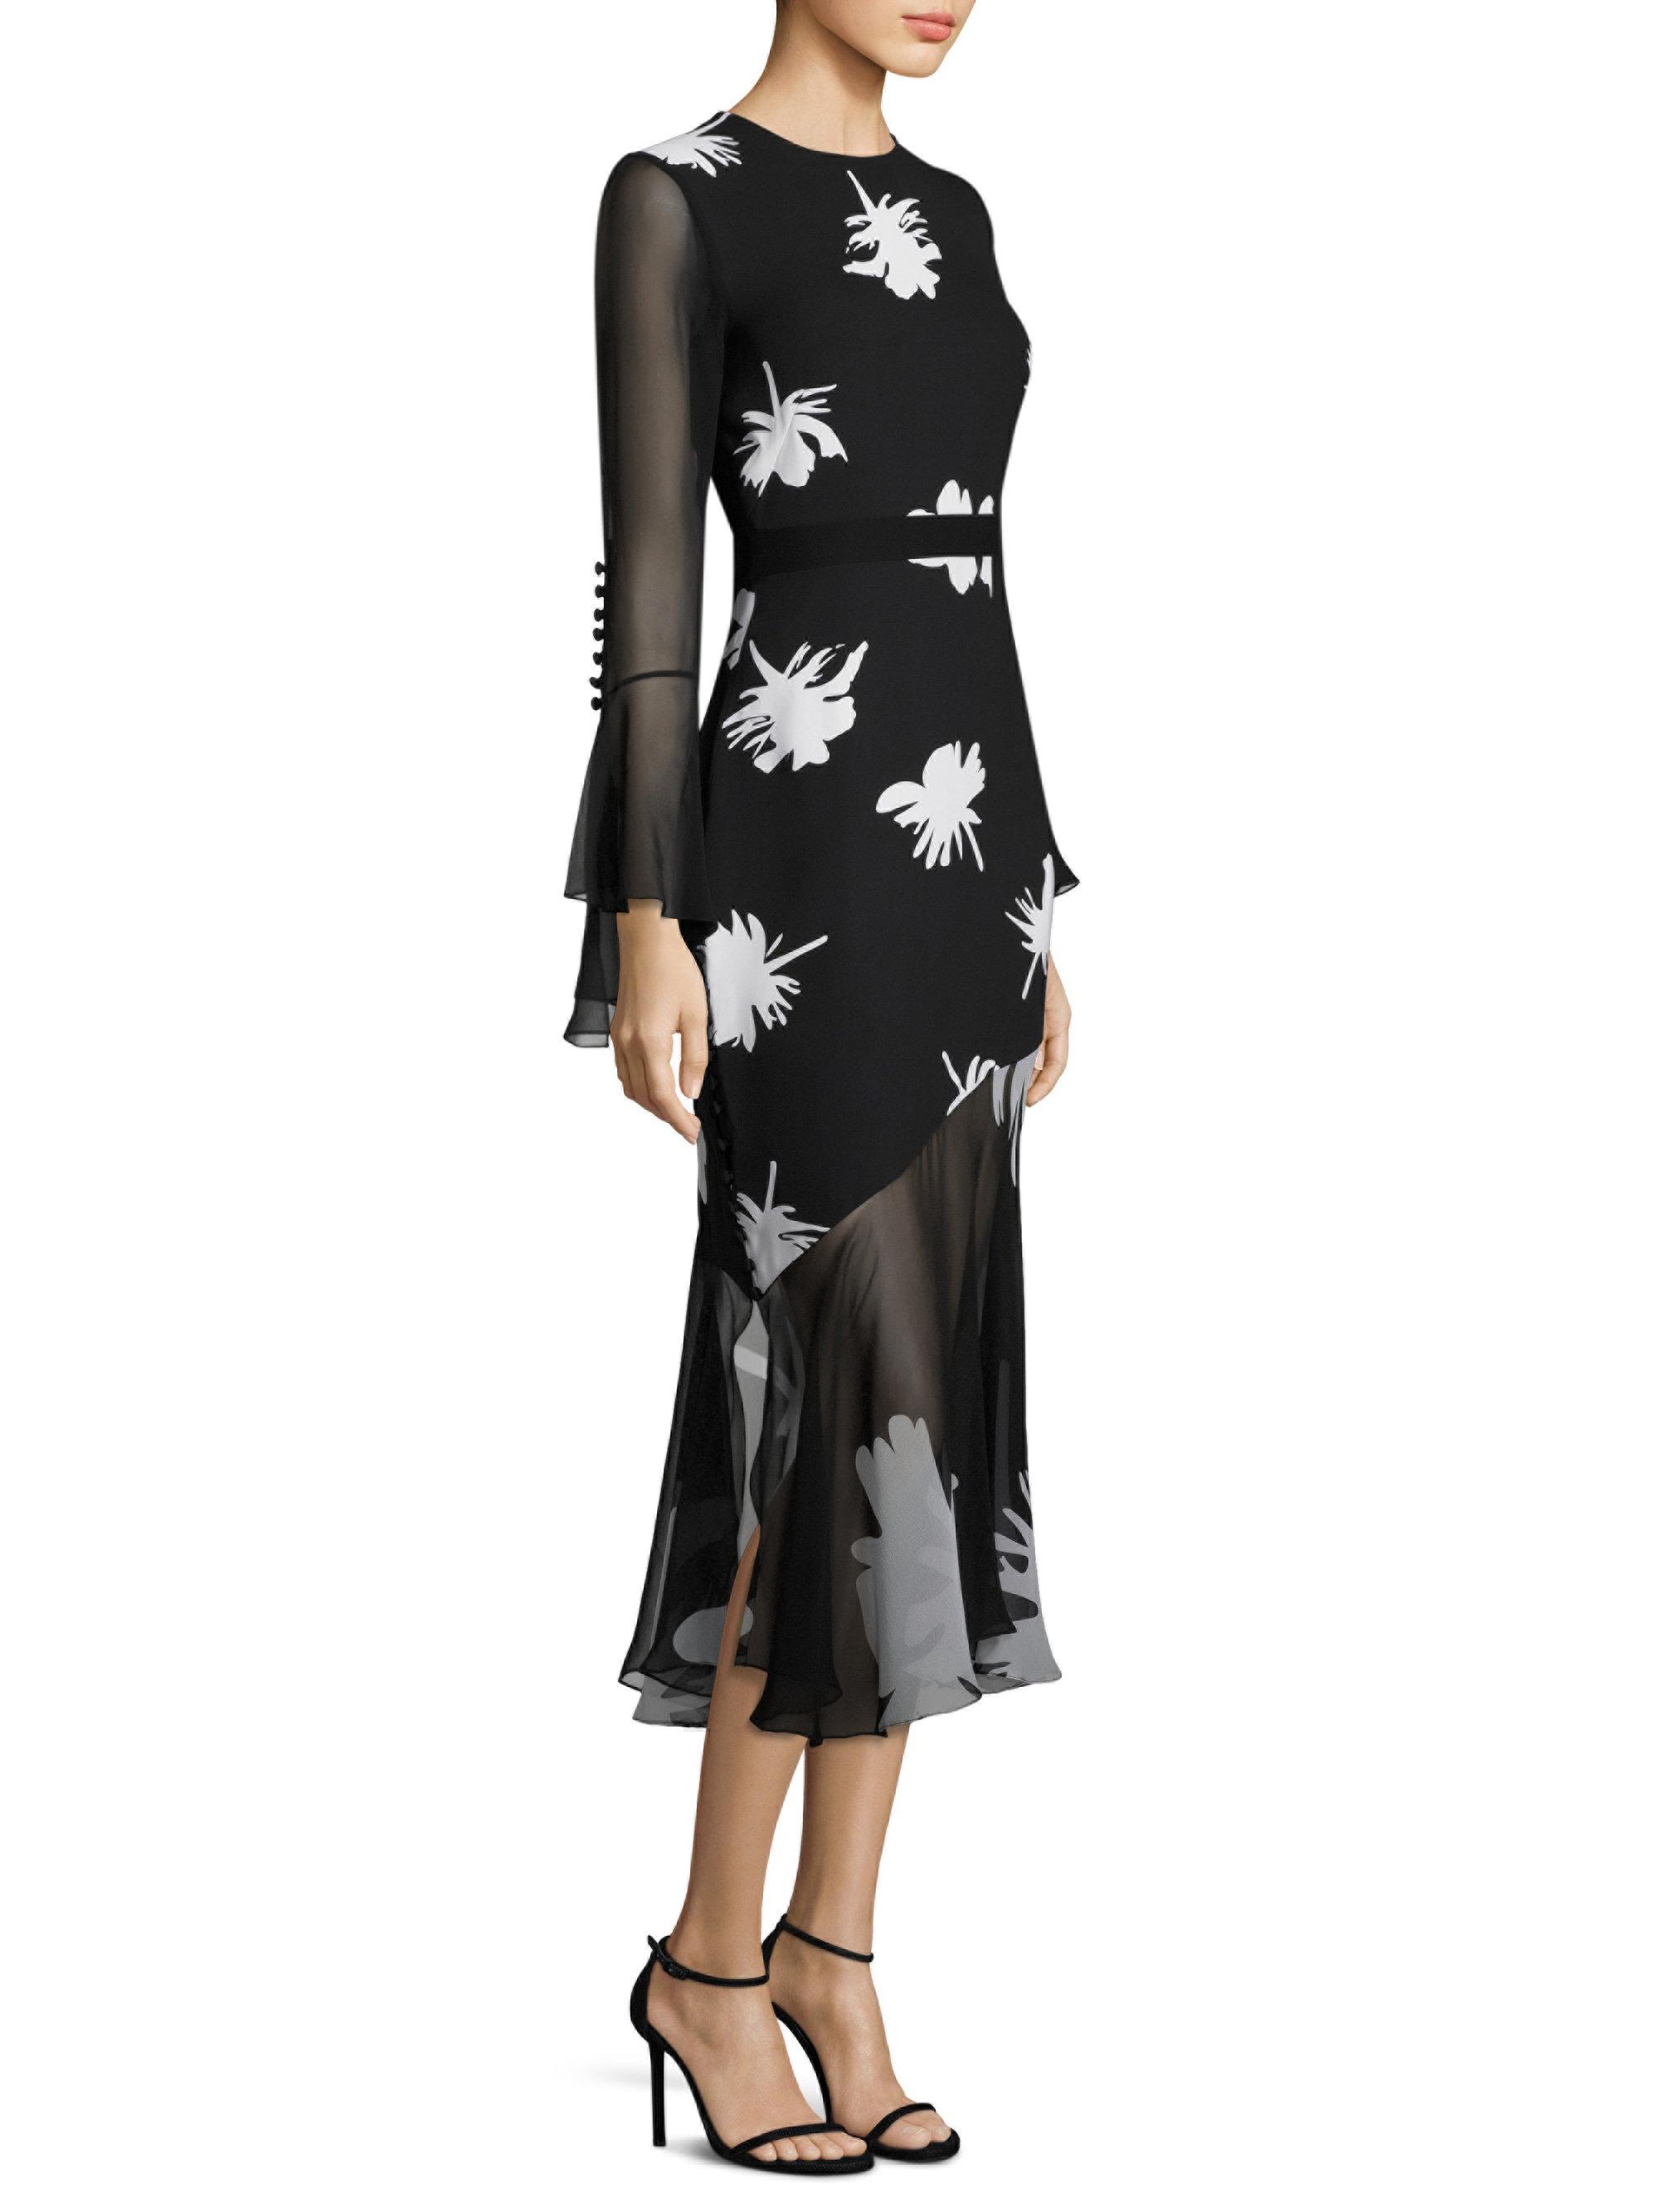 Lyst - Prabal Gurung Floral-print Silk Dress in Black